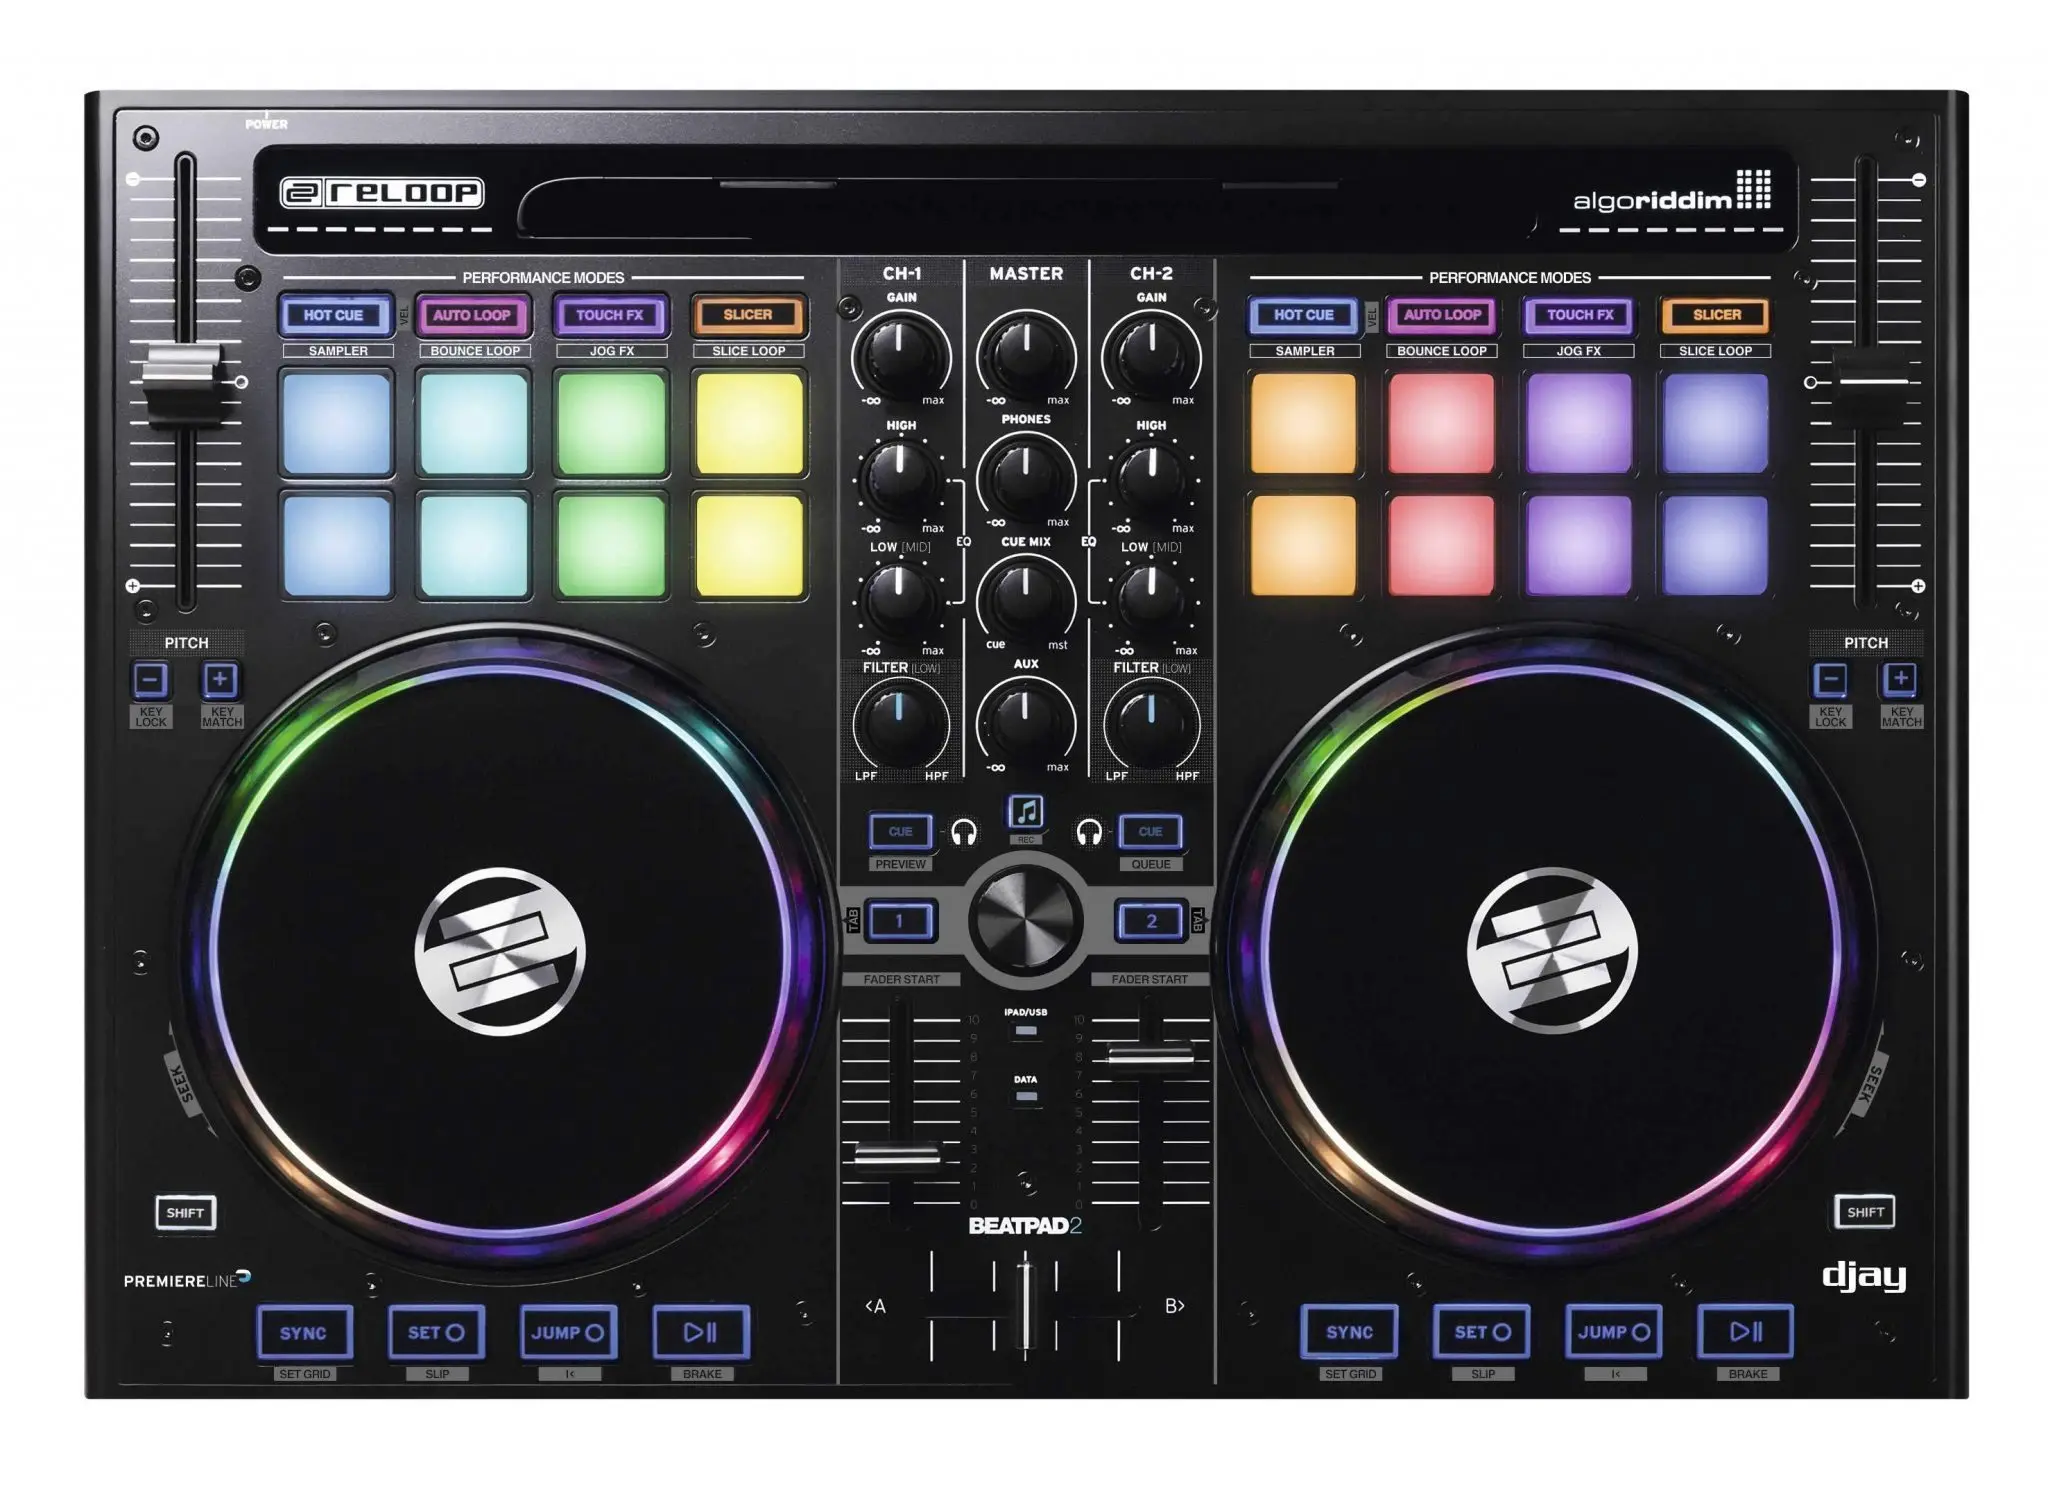 

100% SUMMER DISCOUNT SALES ON Reloop BeatPad 2 2-deck Algoriddim DJAY 2 DJ Controller B-stock